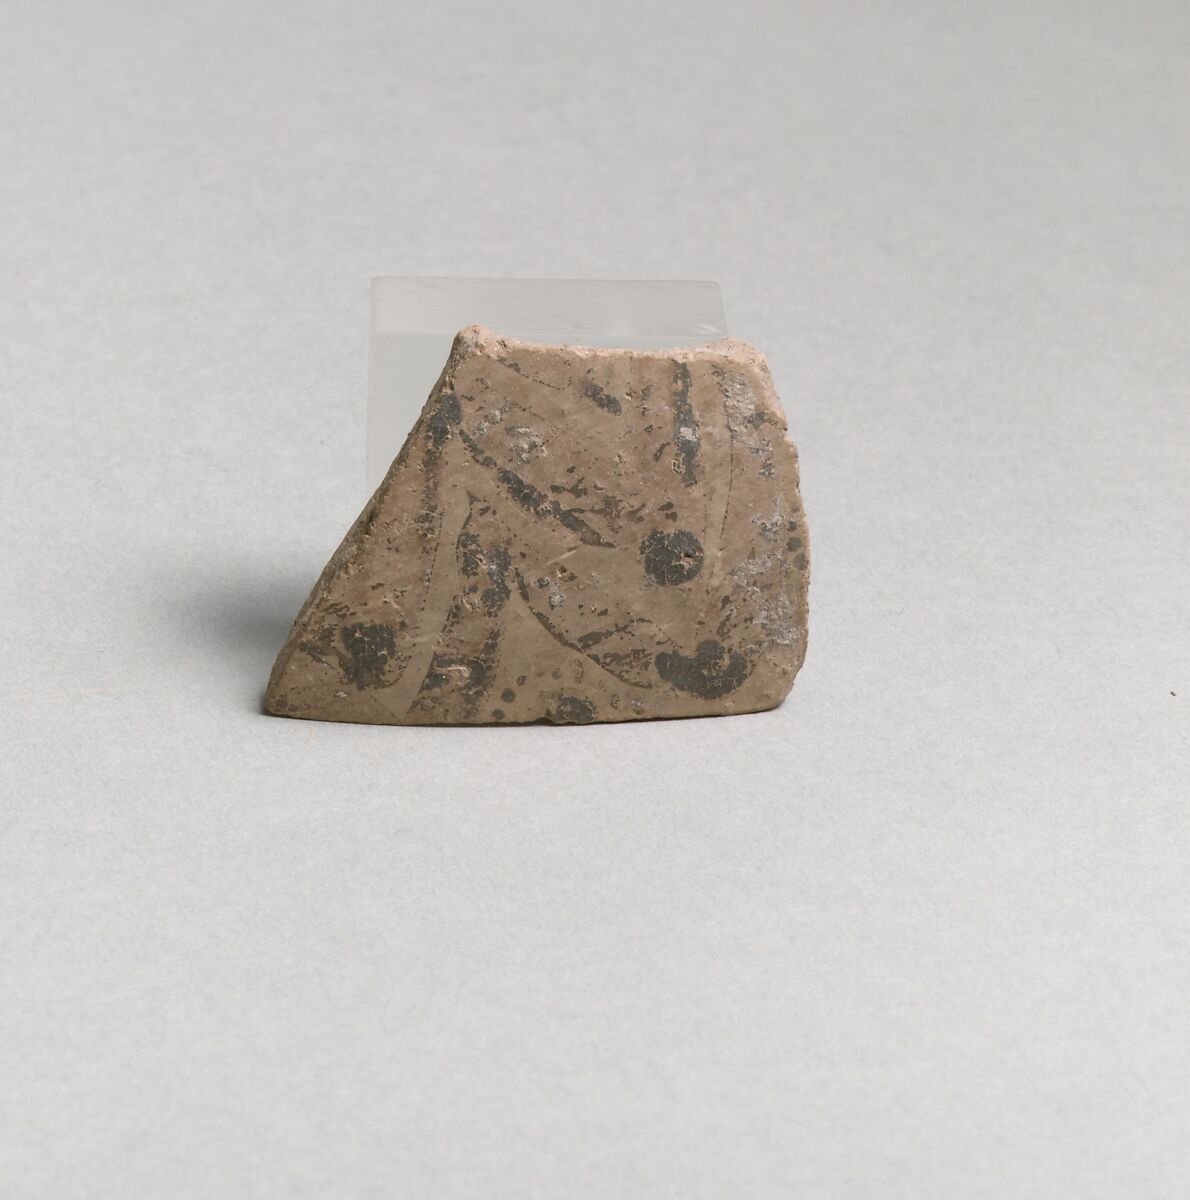 Terracotta vessel fragment with floral motif, Terracotta, Minoan 